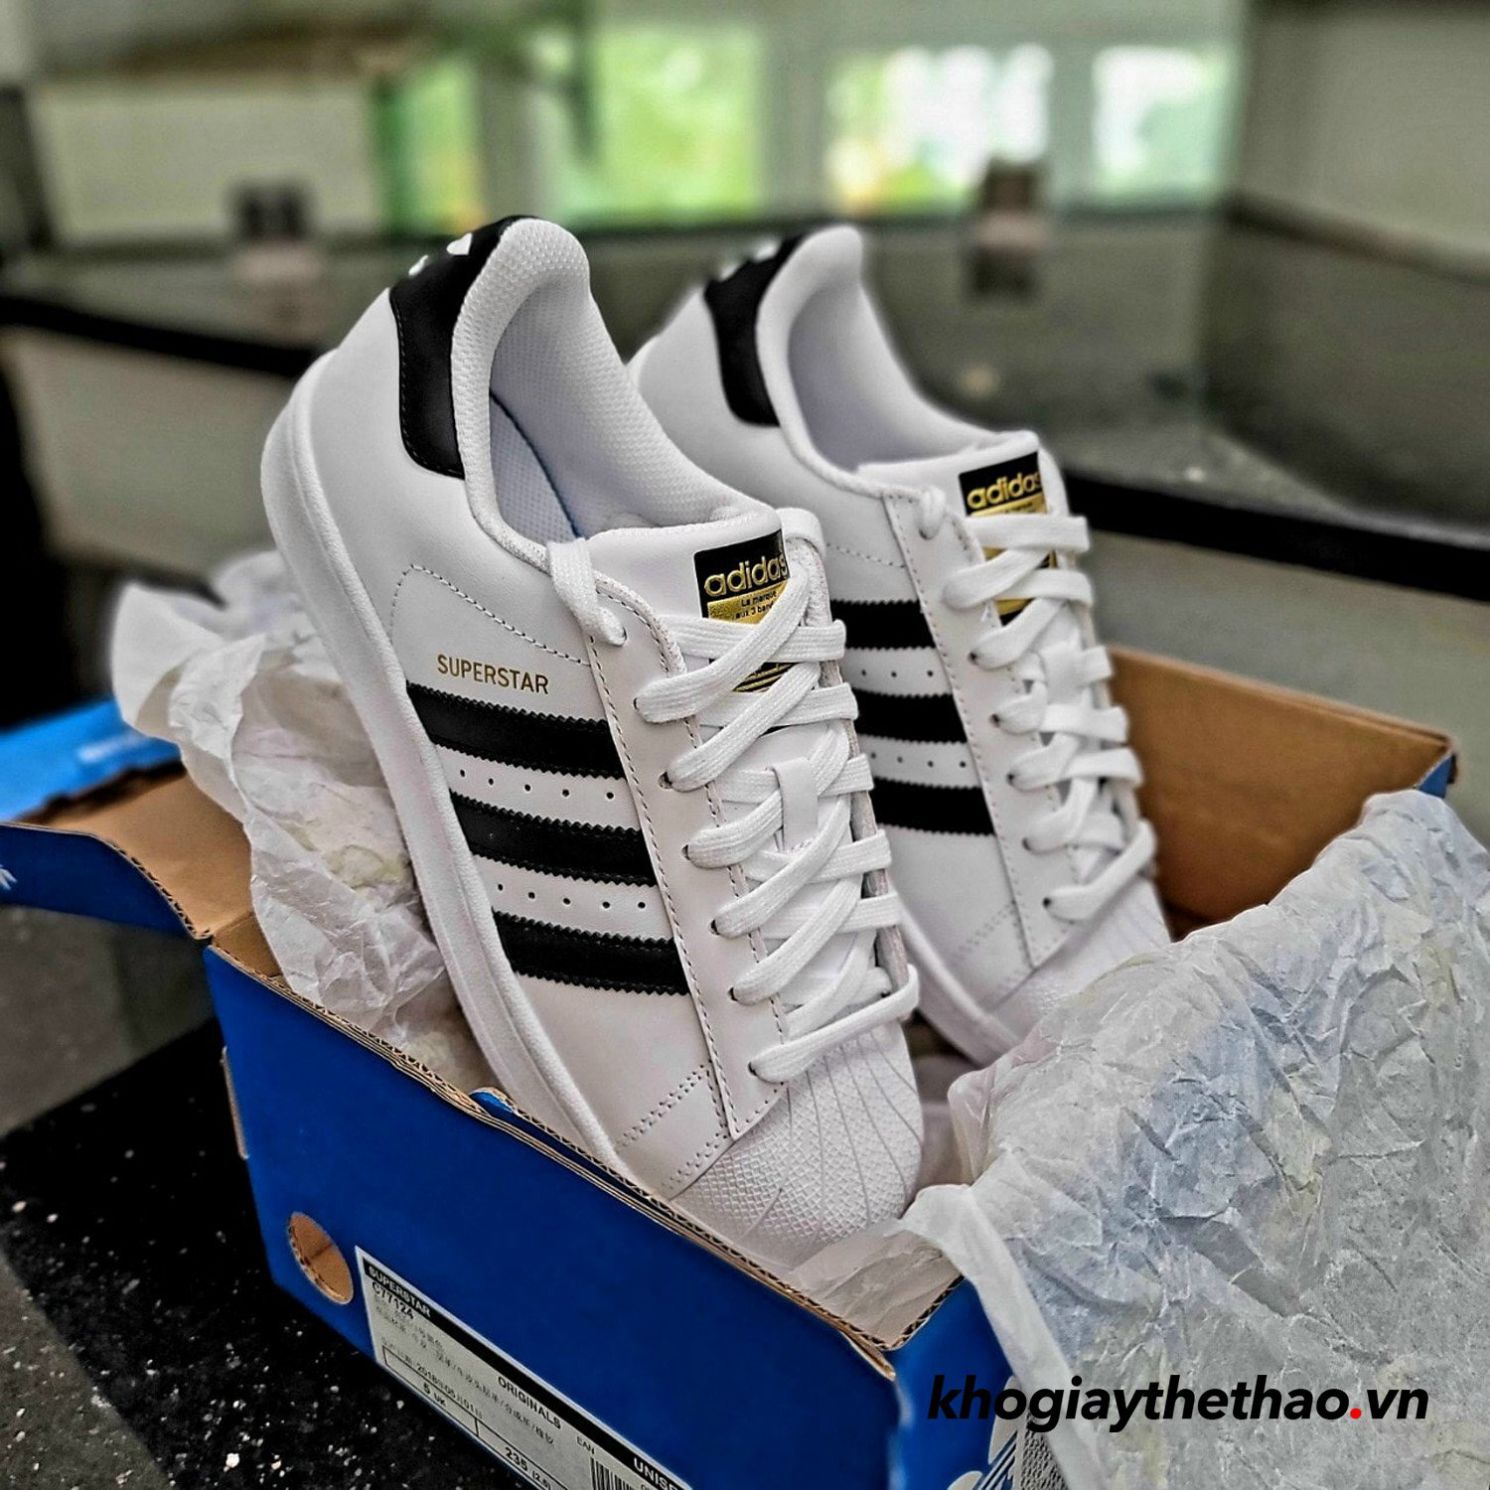 Giày Adidas Superstar trắng sọc đen rep 1:1